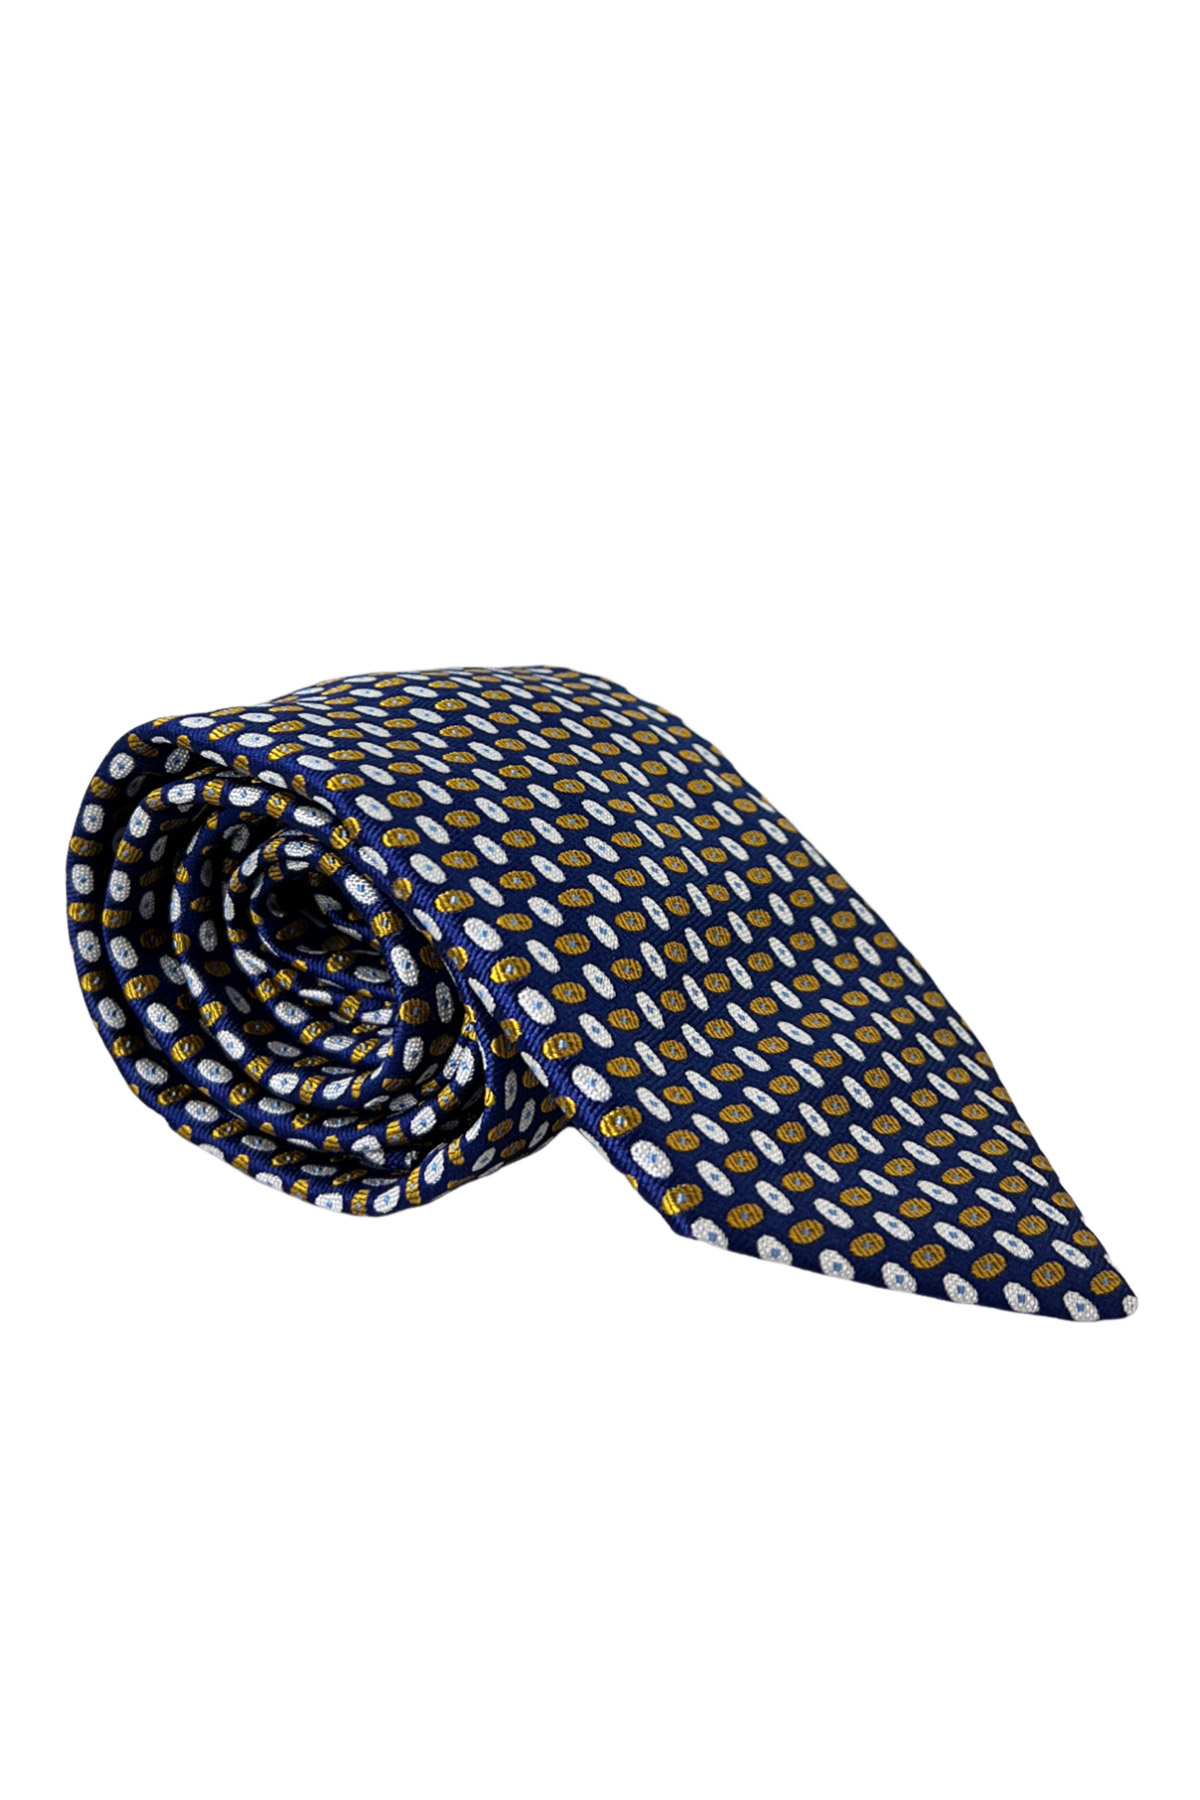 Cravatta uomo blu fantasia ovali multicolor bianchi e senape 9cm da cerimonia elegante pura seta